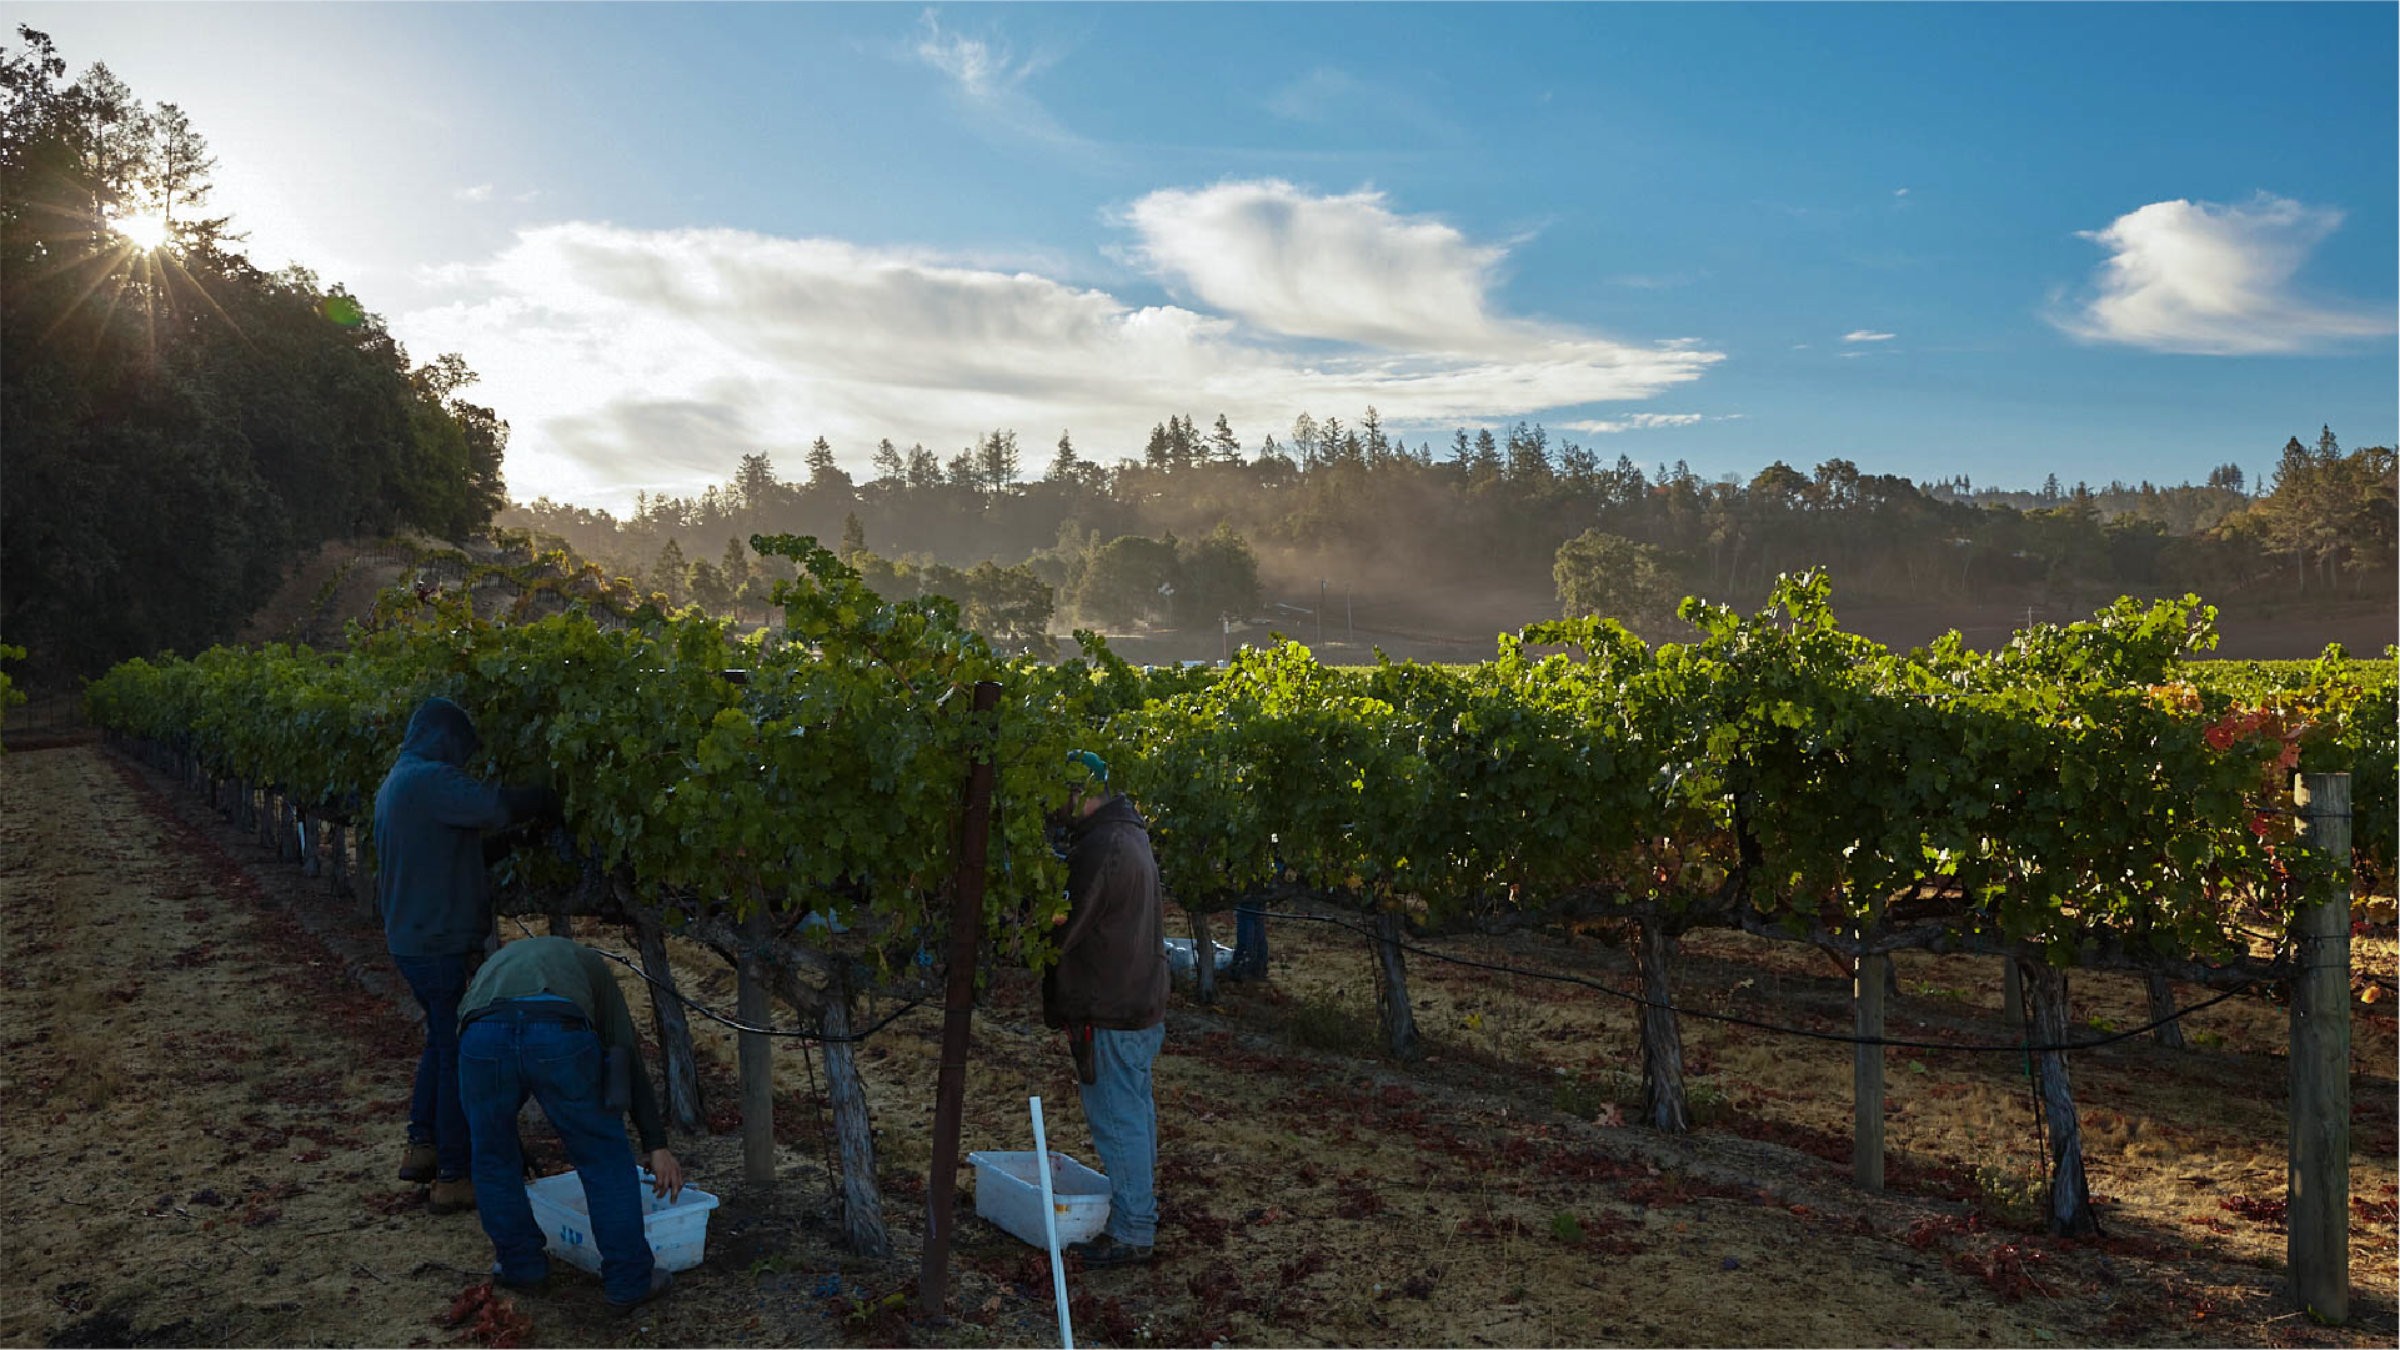 Harvesting grapes in the vineyard